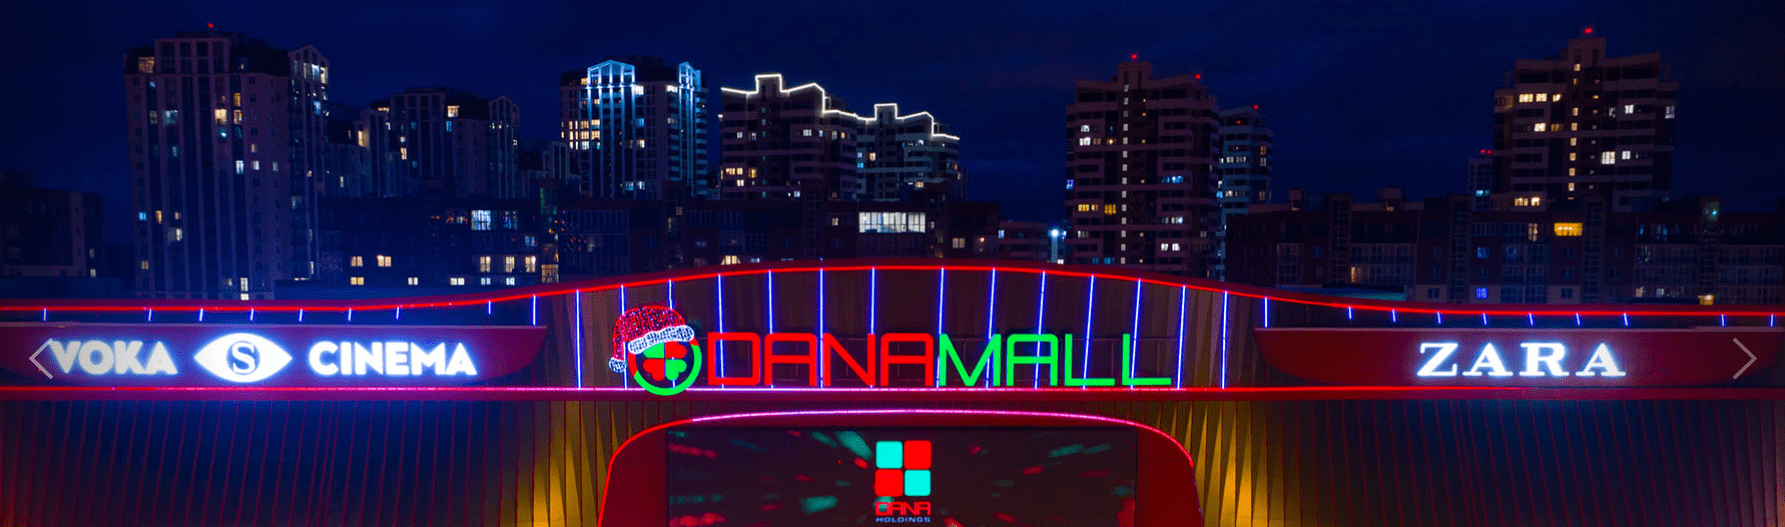 Дана Молл (dana-mall) – официальный сайт